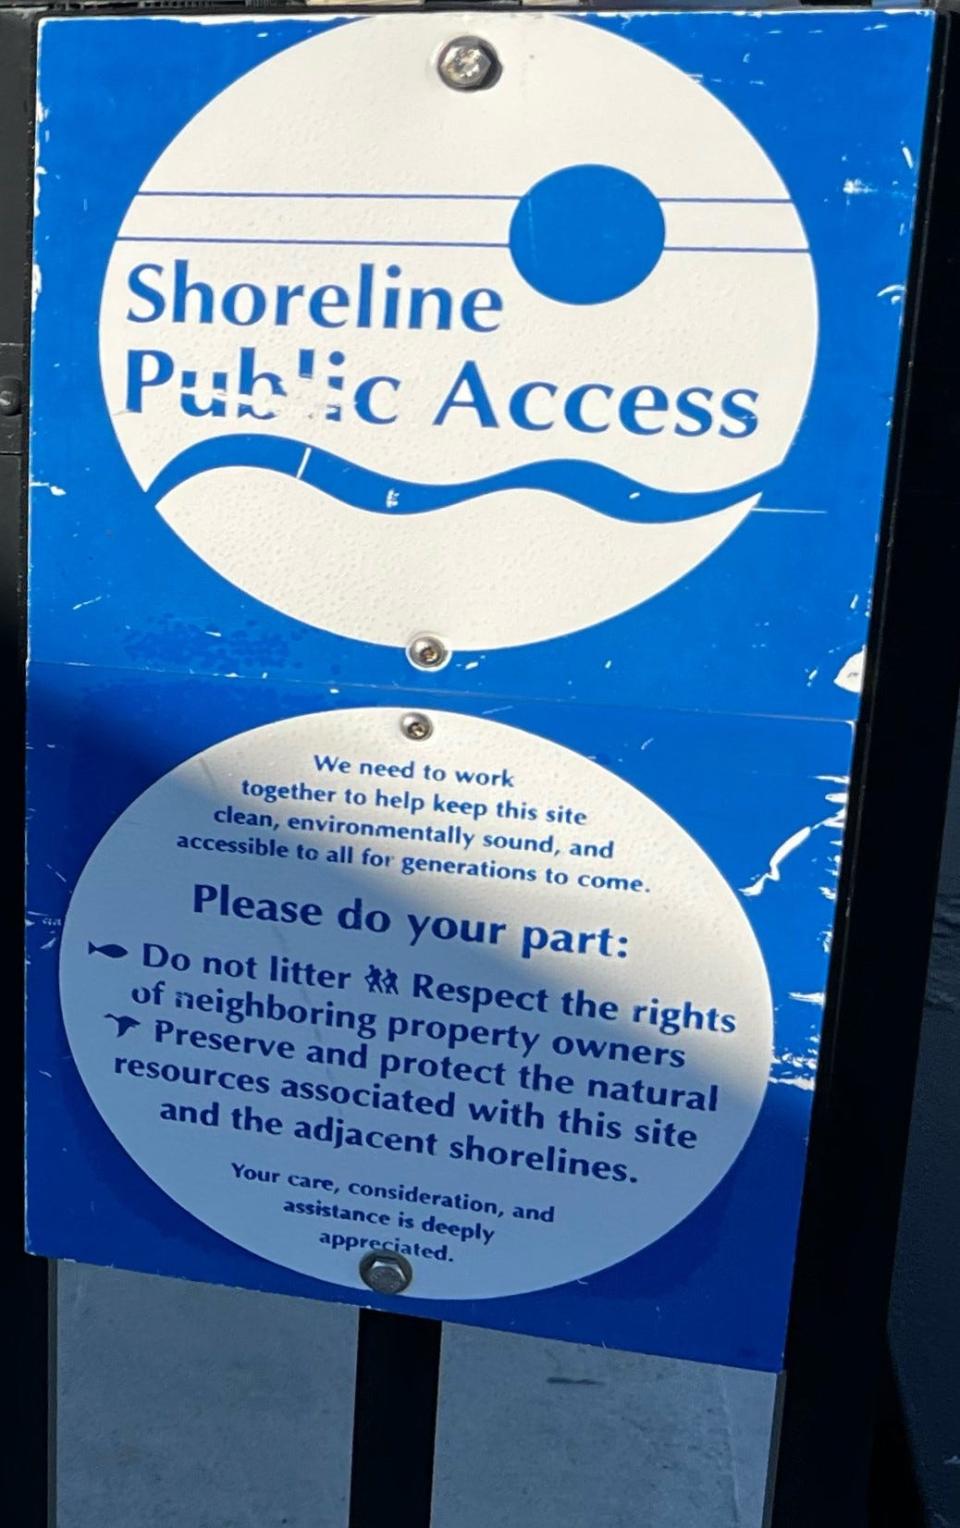 A sign marks a shoreline public access point in Rhode Island.